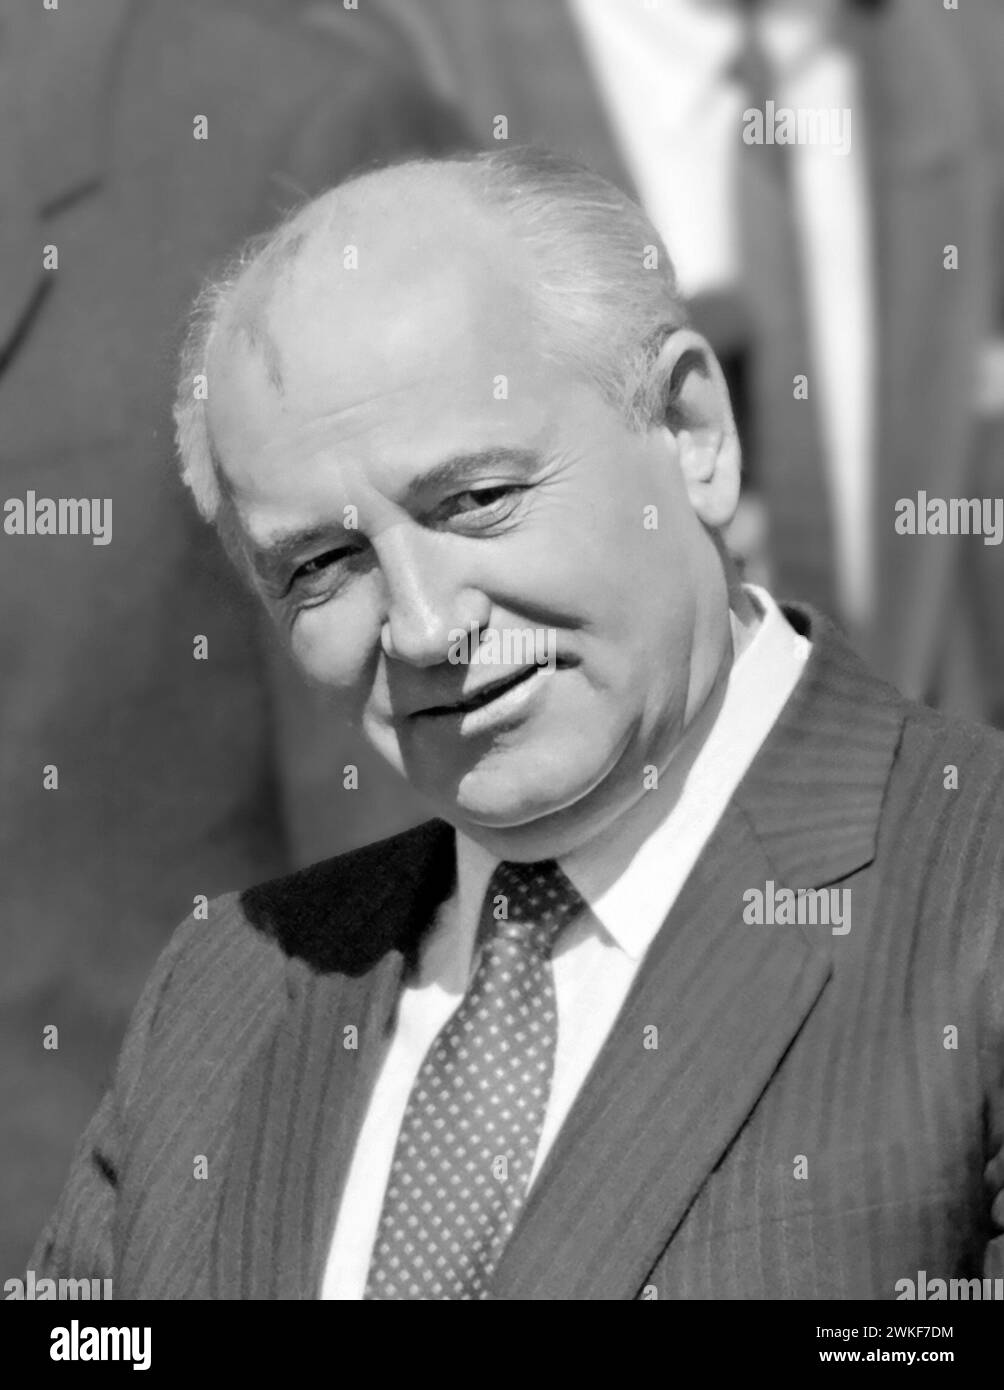 Mikhail Gorbachev. Portrait of the former leader of the Soviet Union, Mikhail Sergeyevich Gorbachev (1931-2022) in 1990 Stock Photo